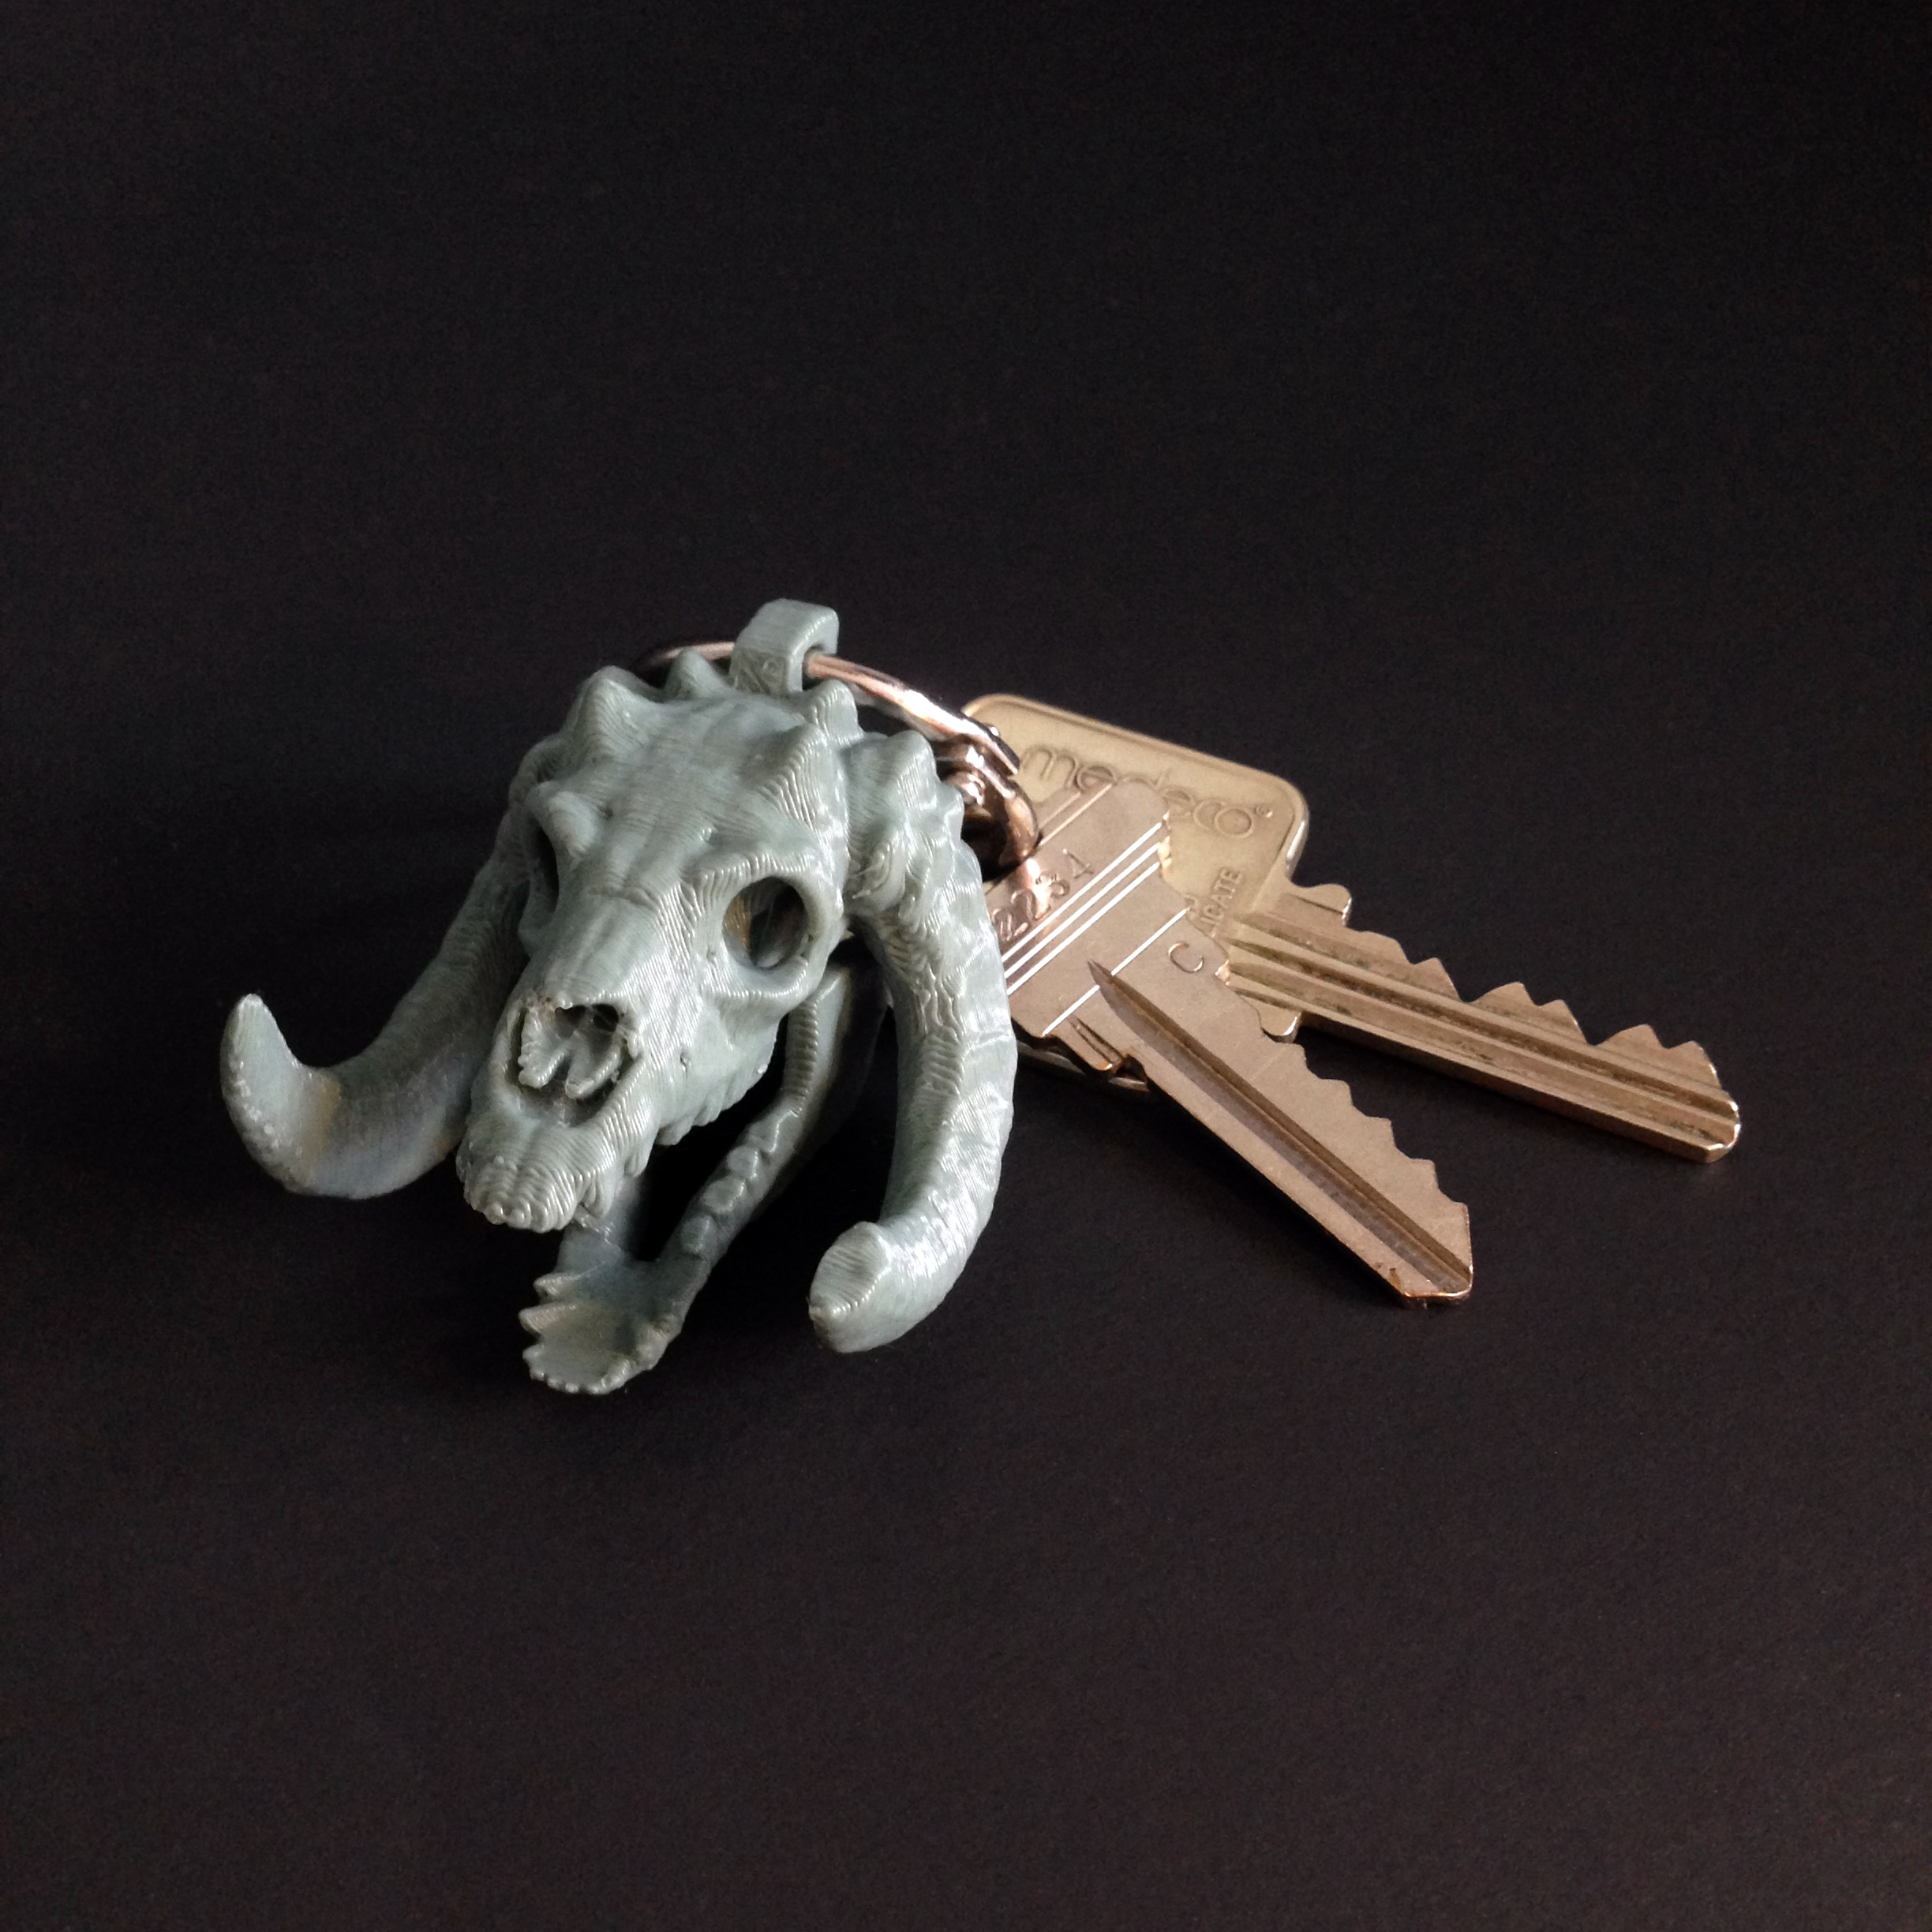 'Sleeping Bag' Mini Skull Charm, by 3DKitbash